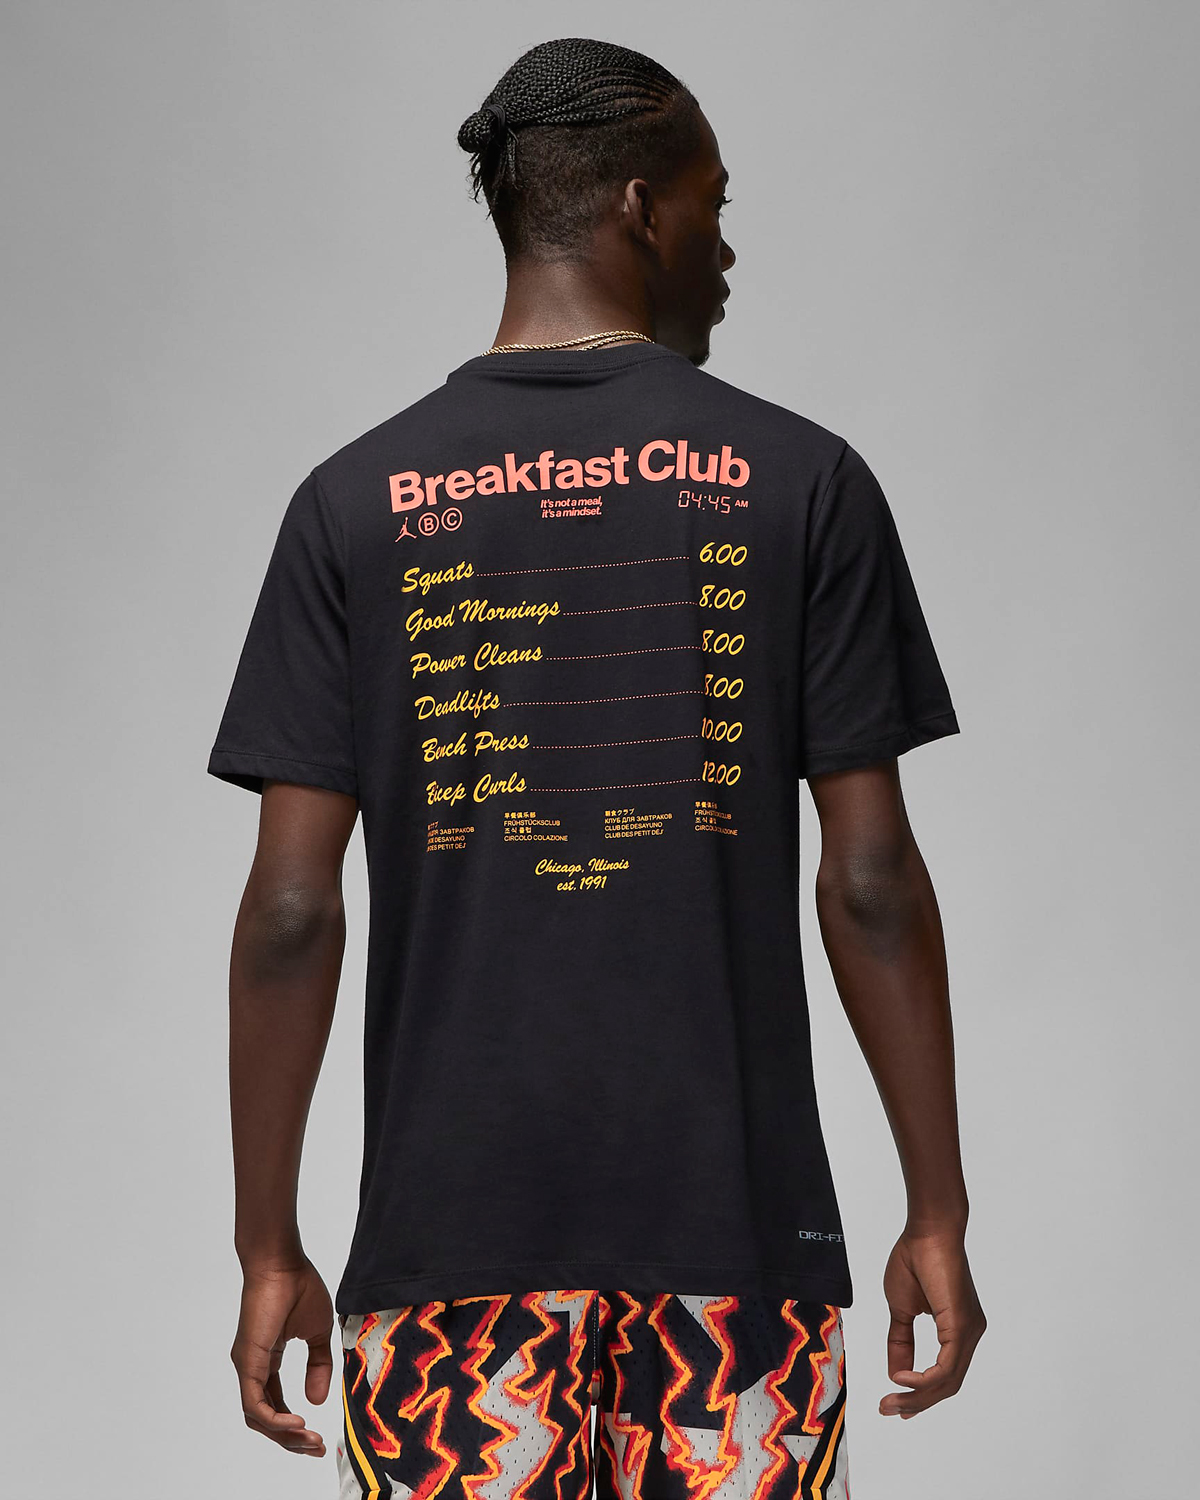 jordan-breakfast-club-t-shirt-black-orange-taxi-yellow-2